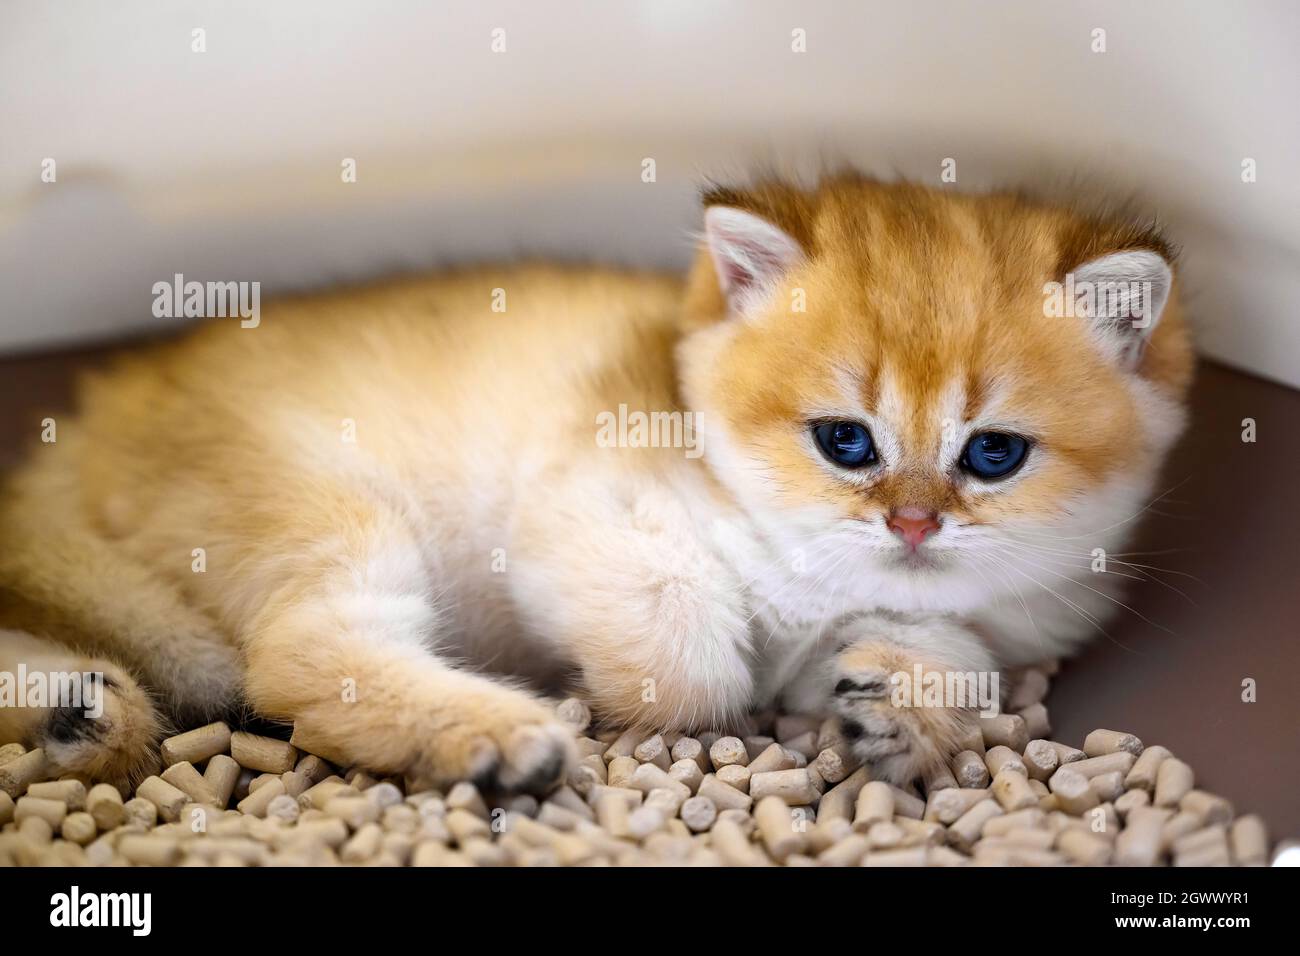 Cute little kitten sitting in the litter box with tofu cat litter, Golden British Shorthair kitten is sleepy. The cat sleeps in the box. Stock Photo